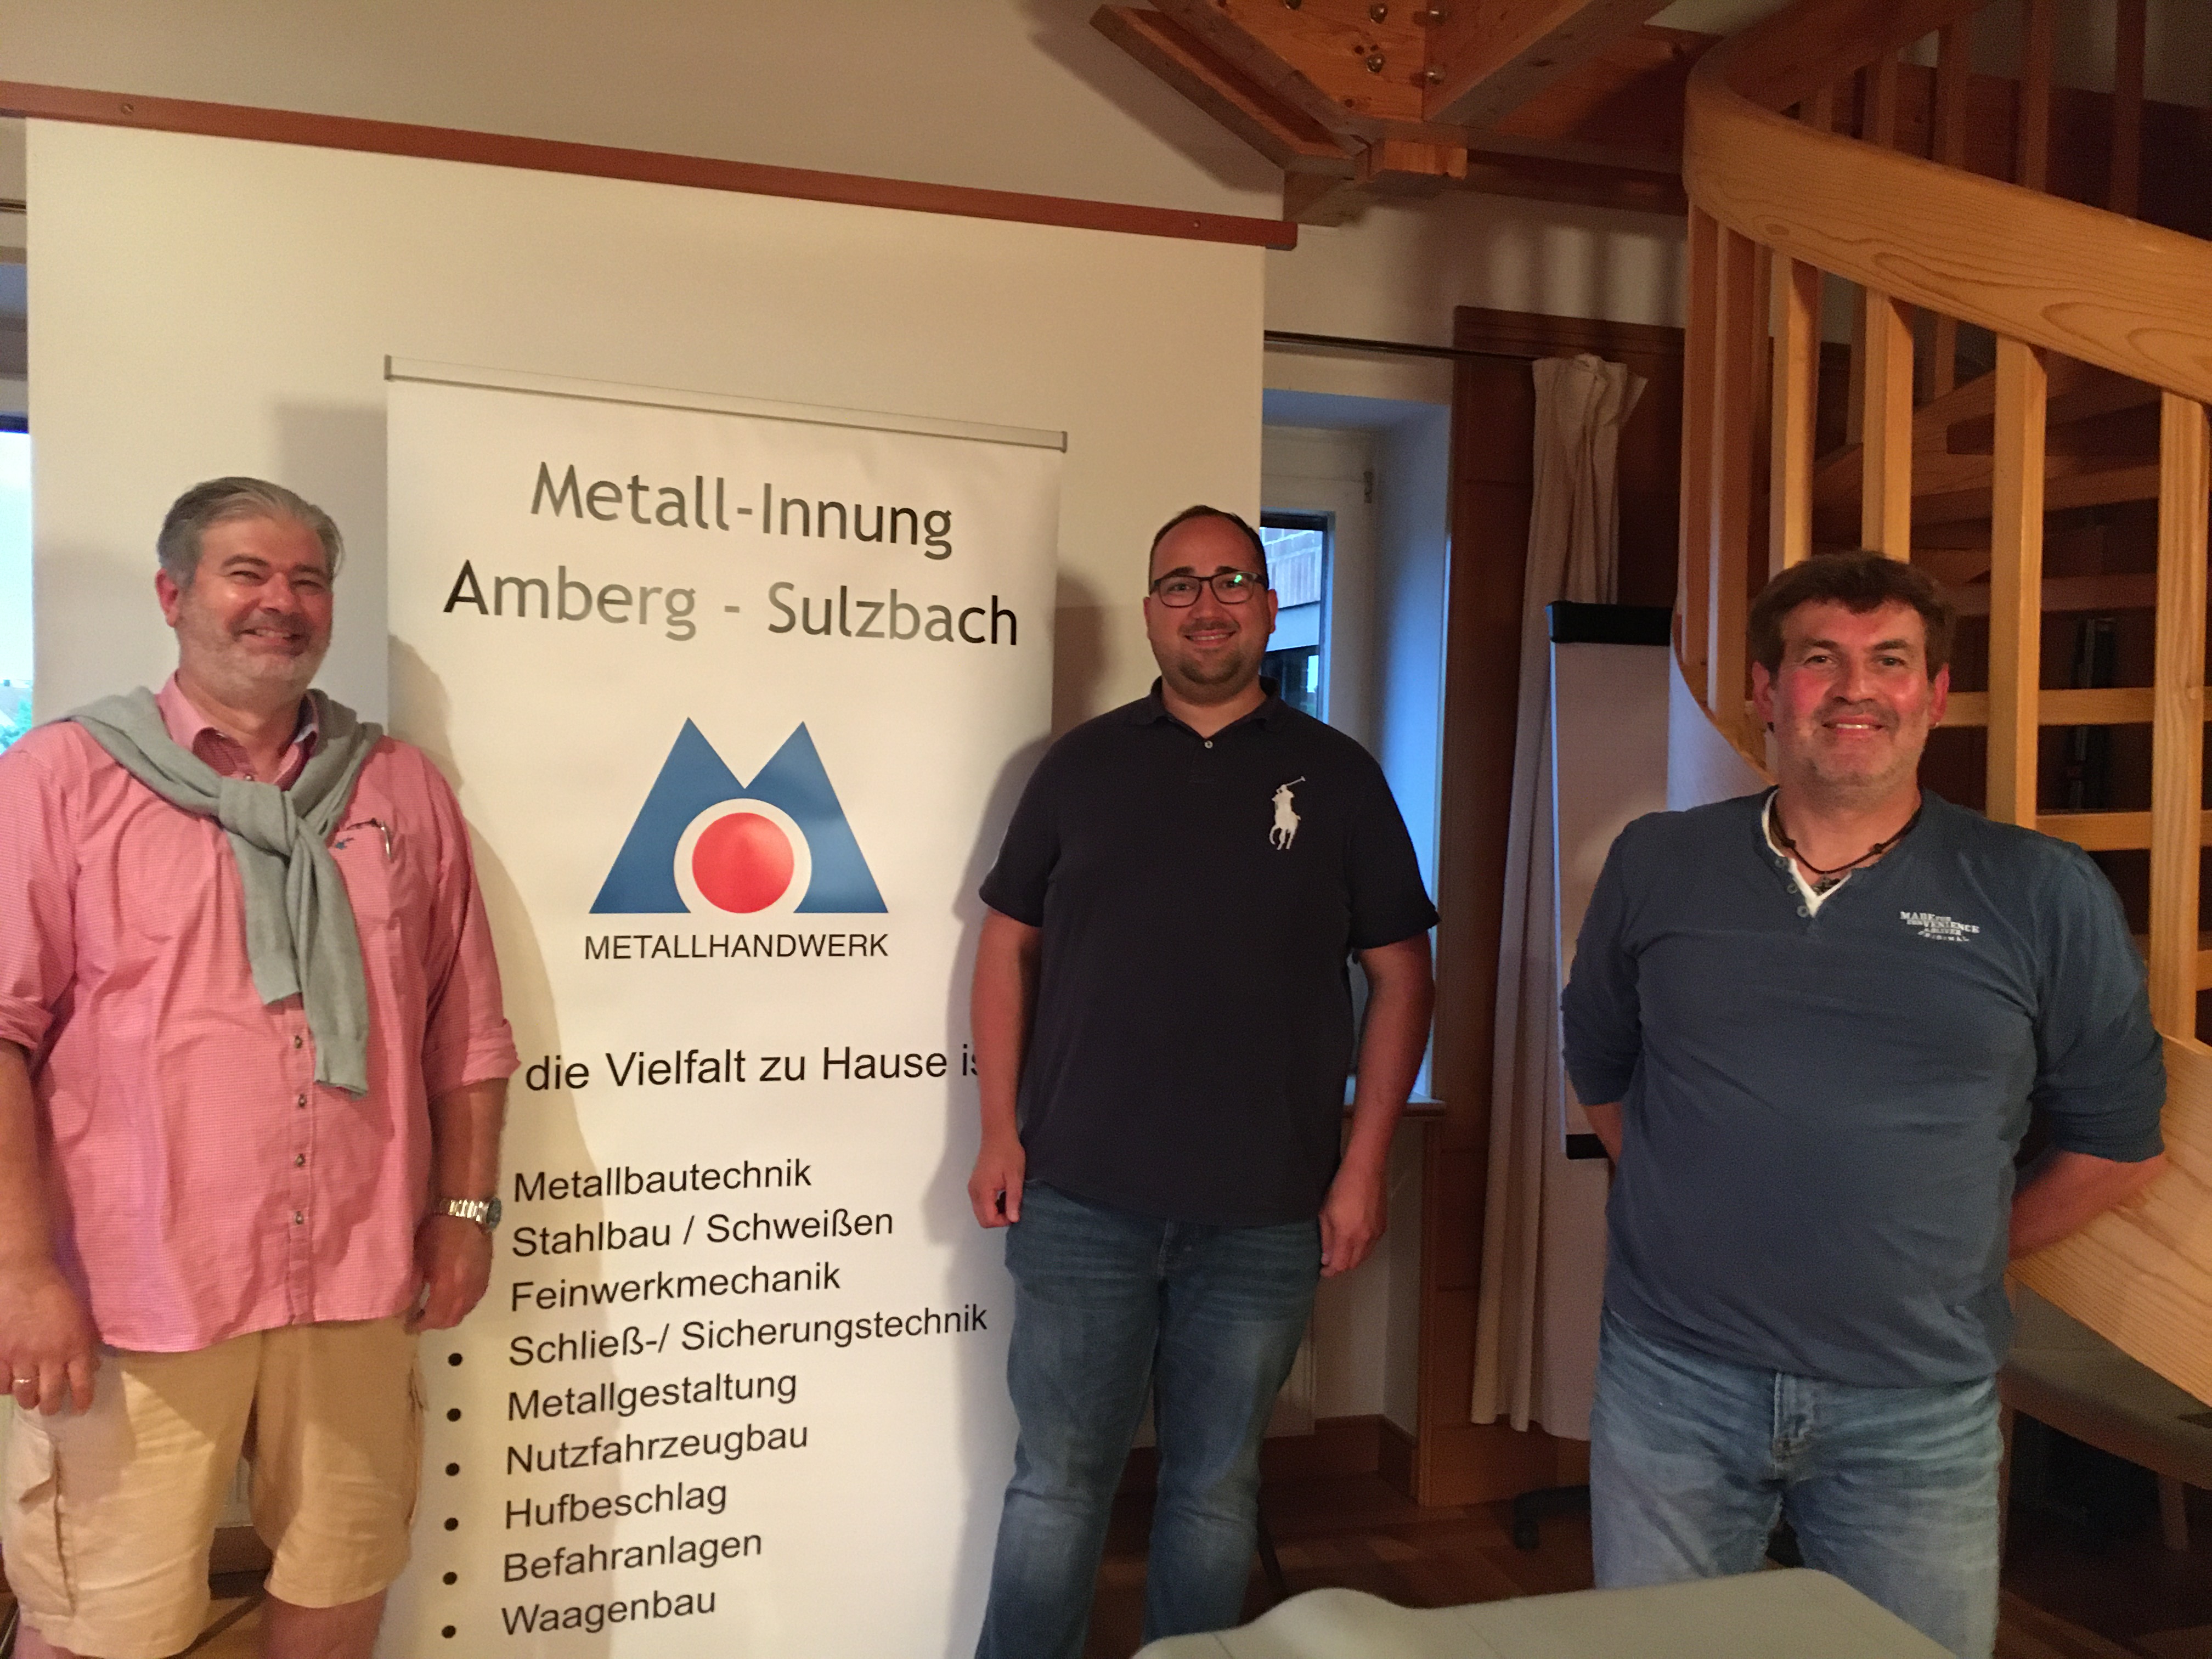 Innungsversammlung der Metall-Innung Amberg-Sulzbach